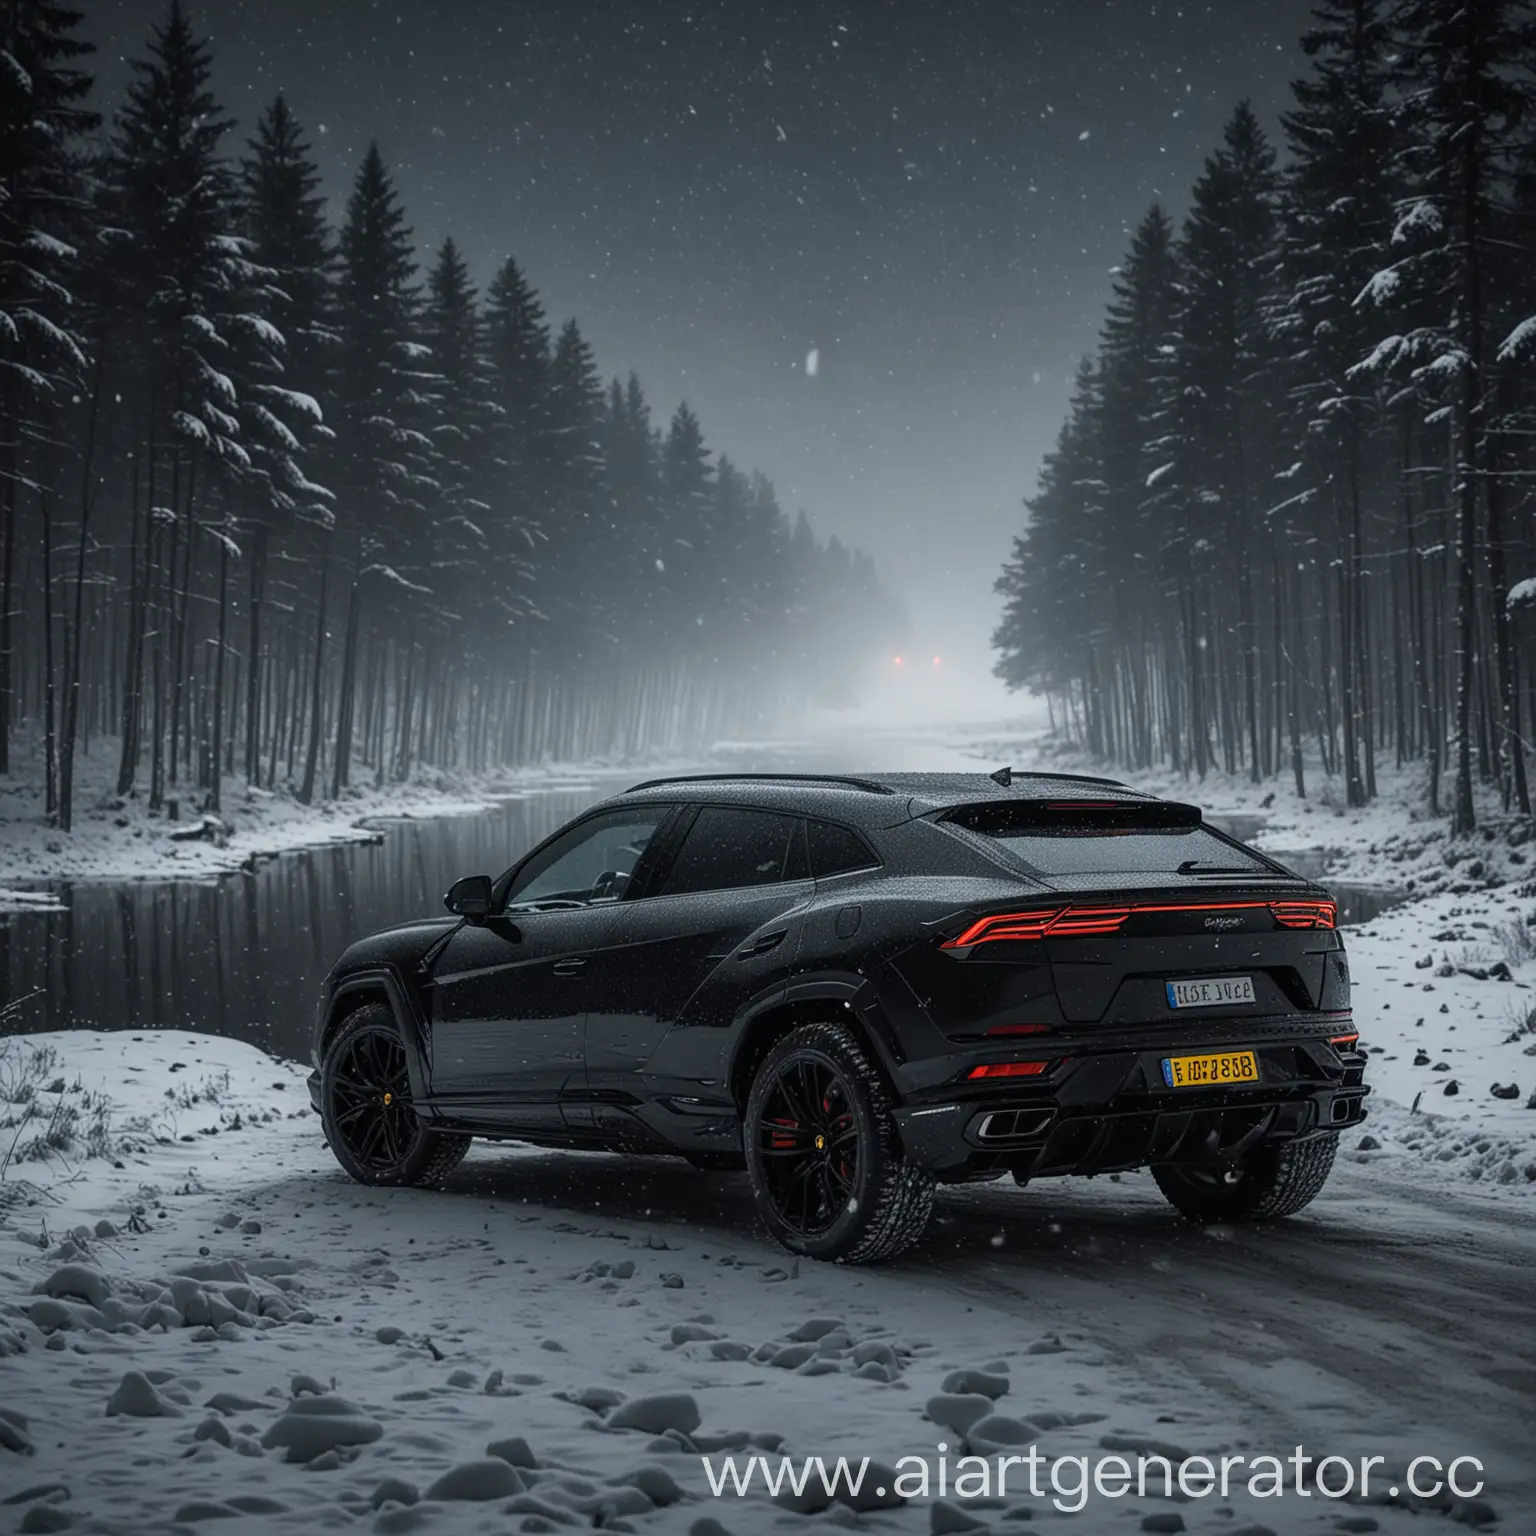 Black-Lamborghini-Urus-Driving-Through-Snowy-Forest-at-Night